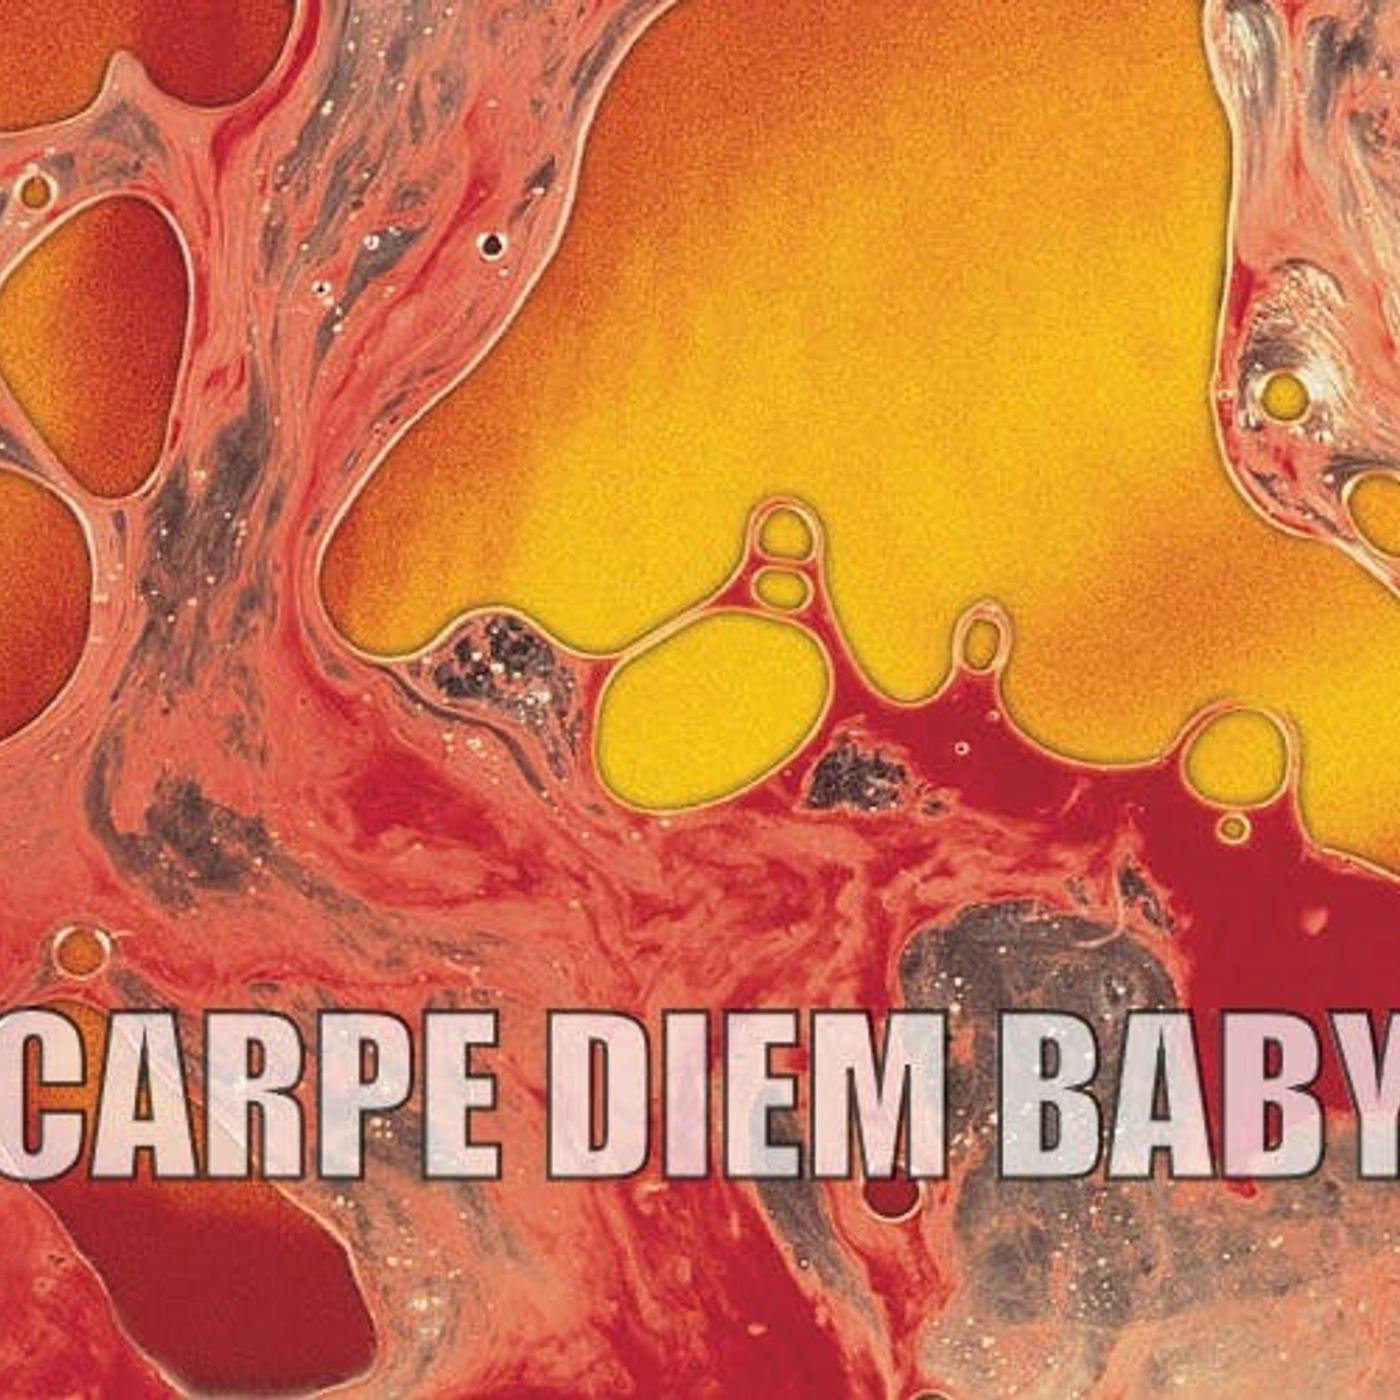 CARPE DIEM BABY: THE METALLICA SAGA PART III